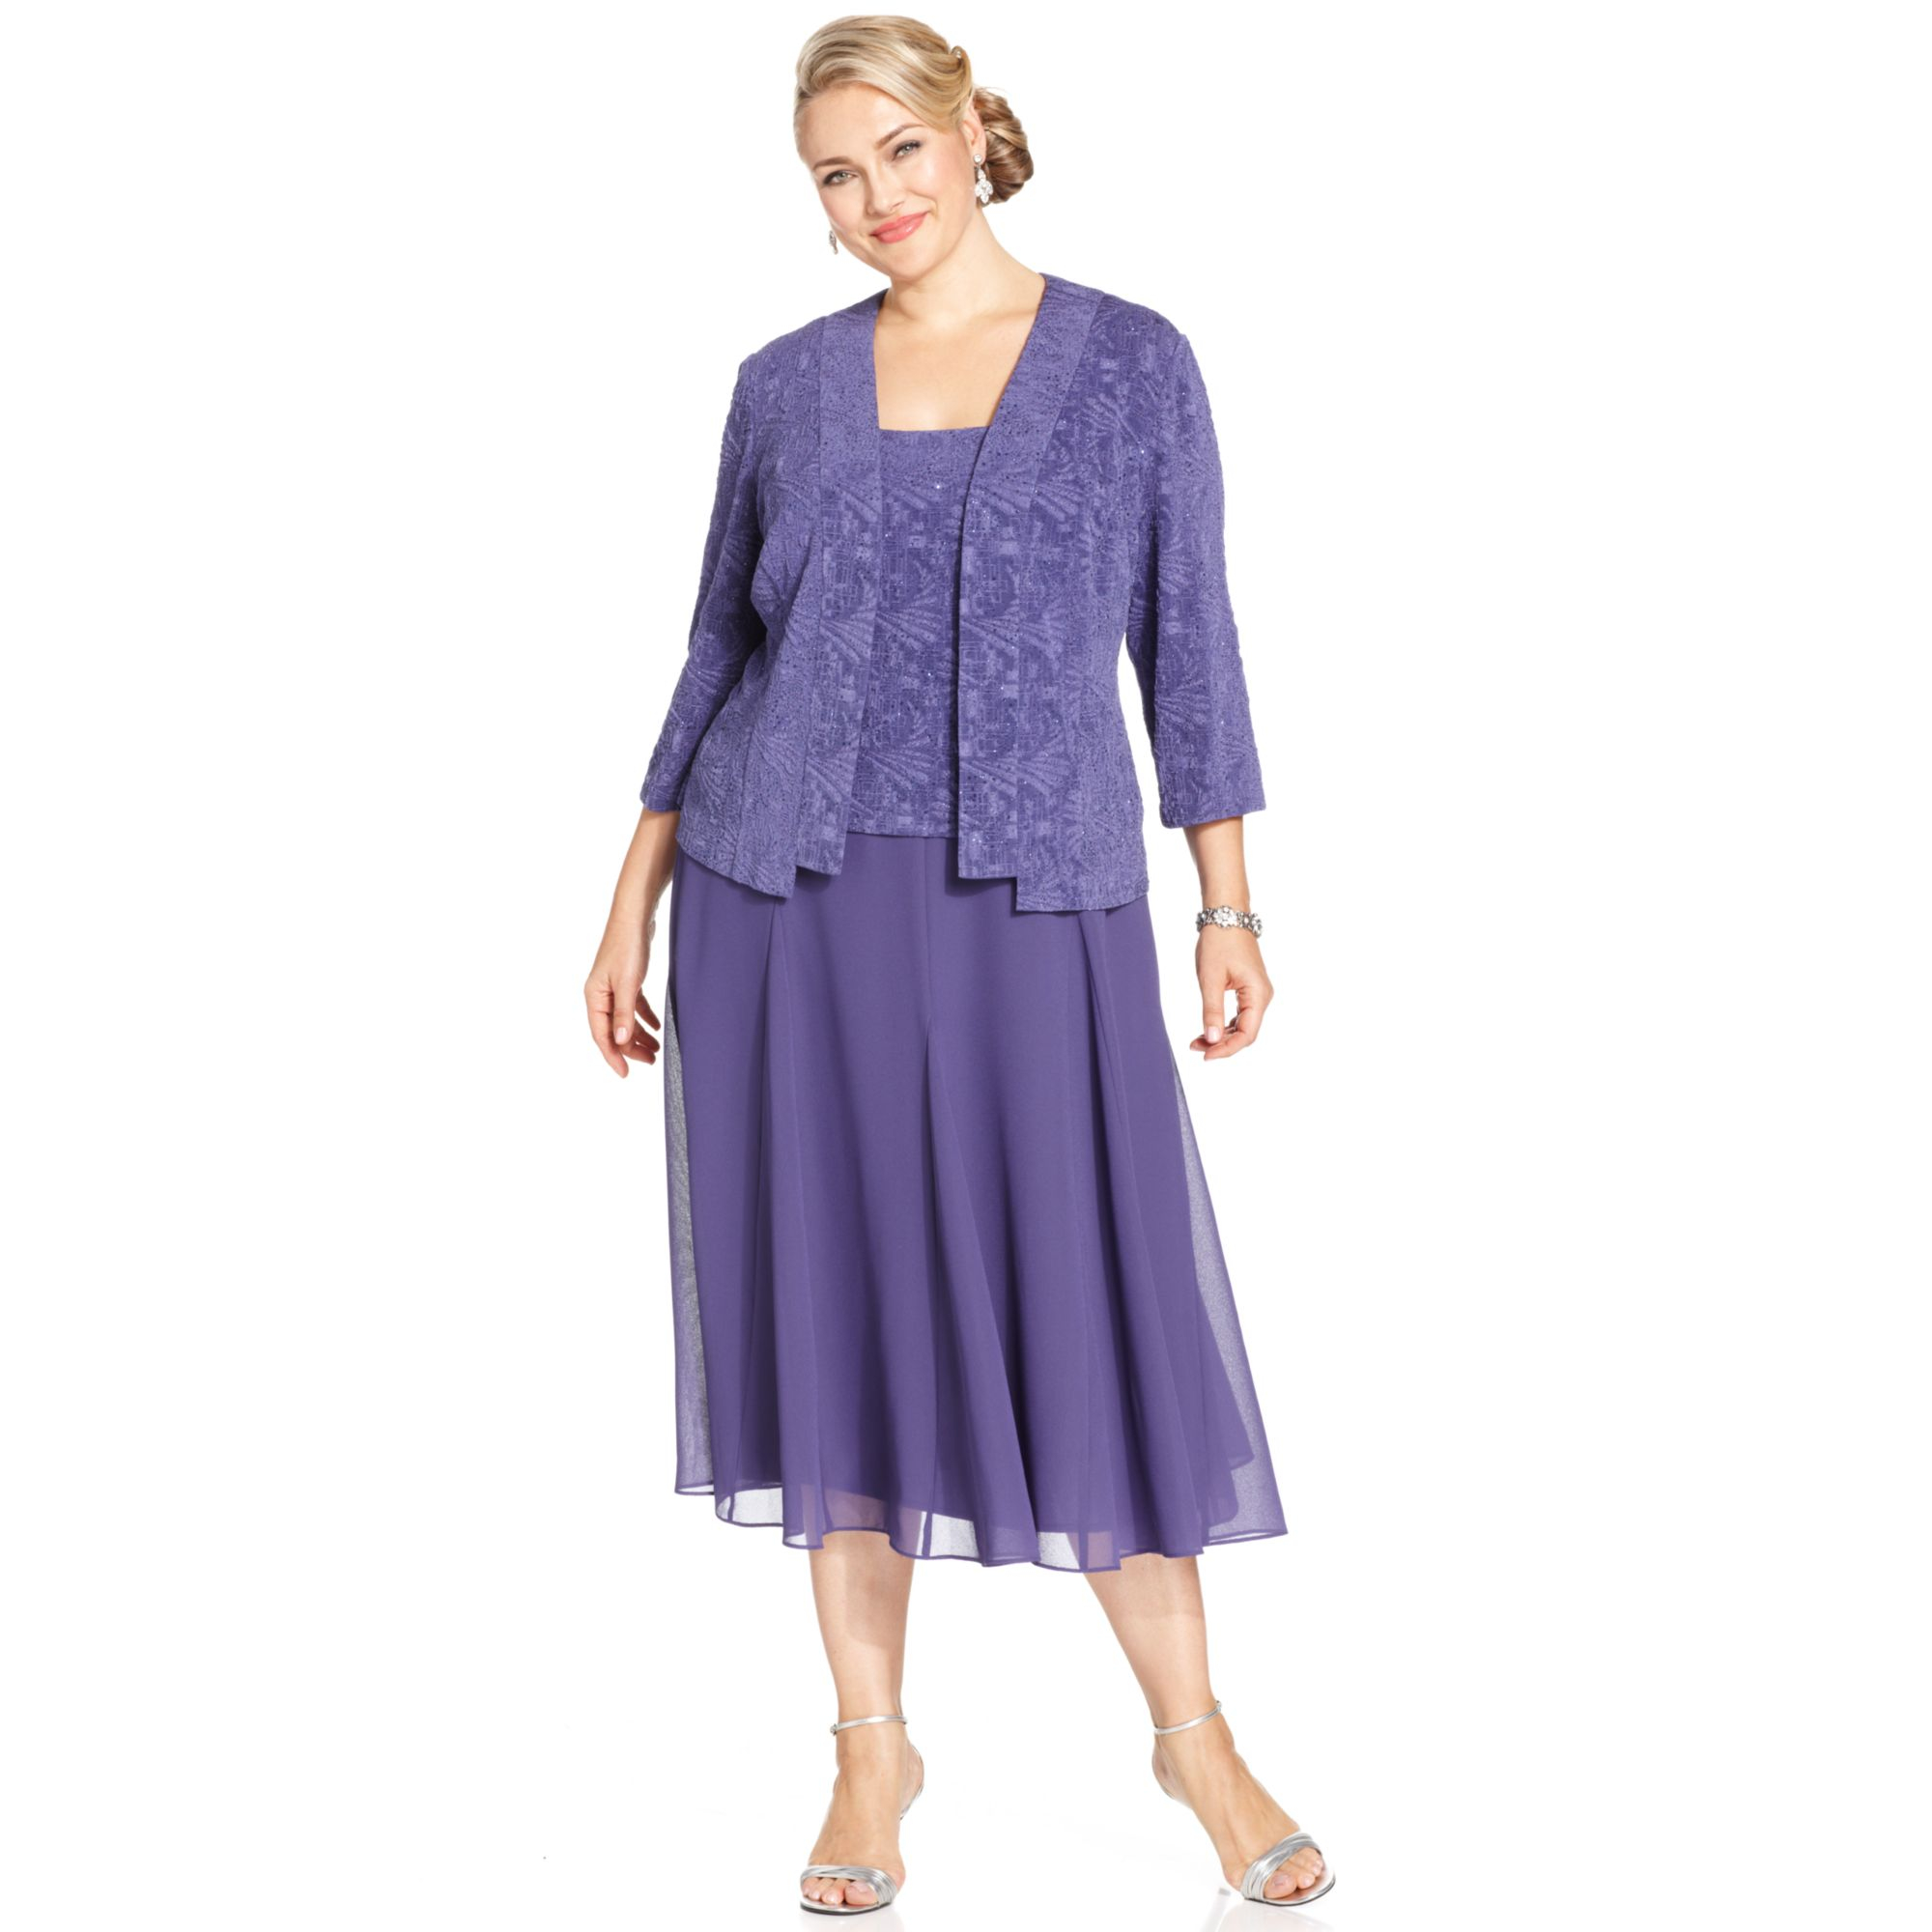 Lyst - Alex Evenings Plus Size Glitter Jacquard Dress and Jacket in Purple